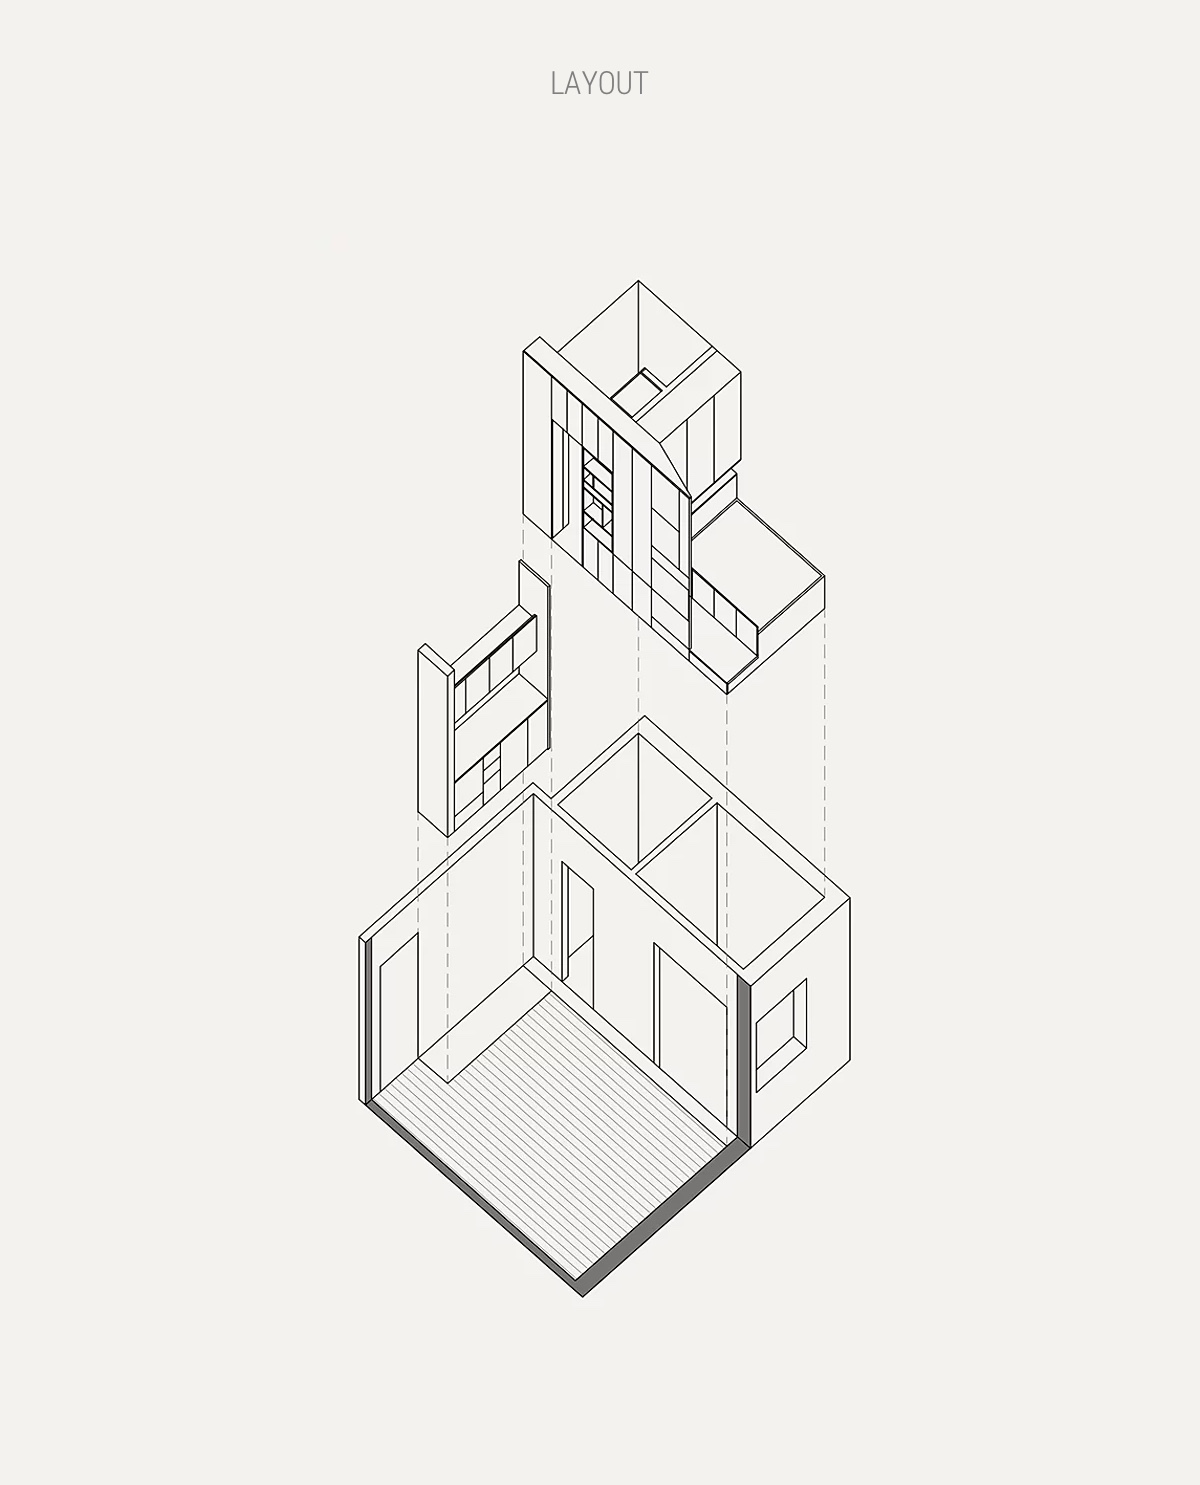 small-home-layout-idea-600x743.jpg